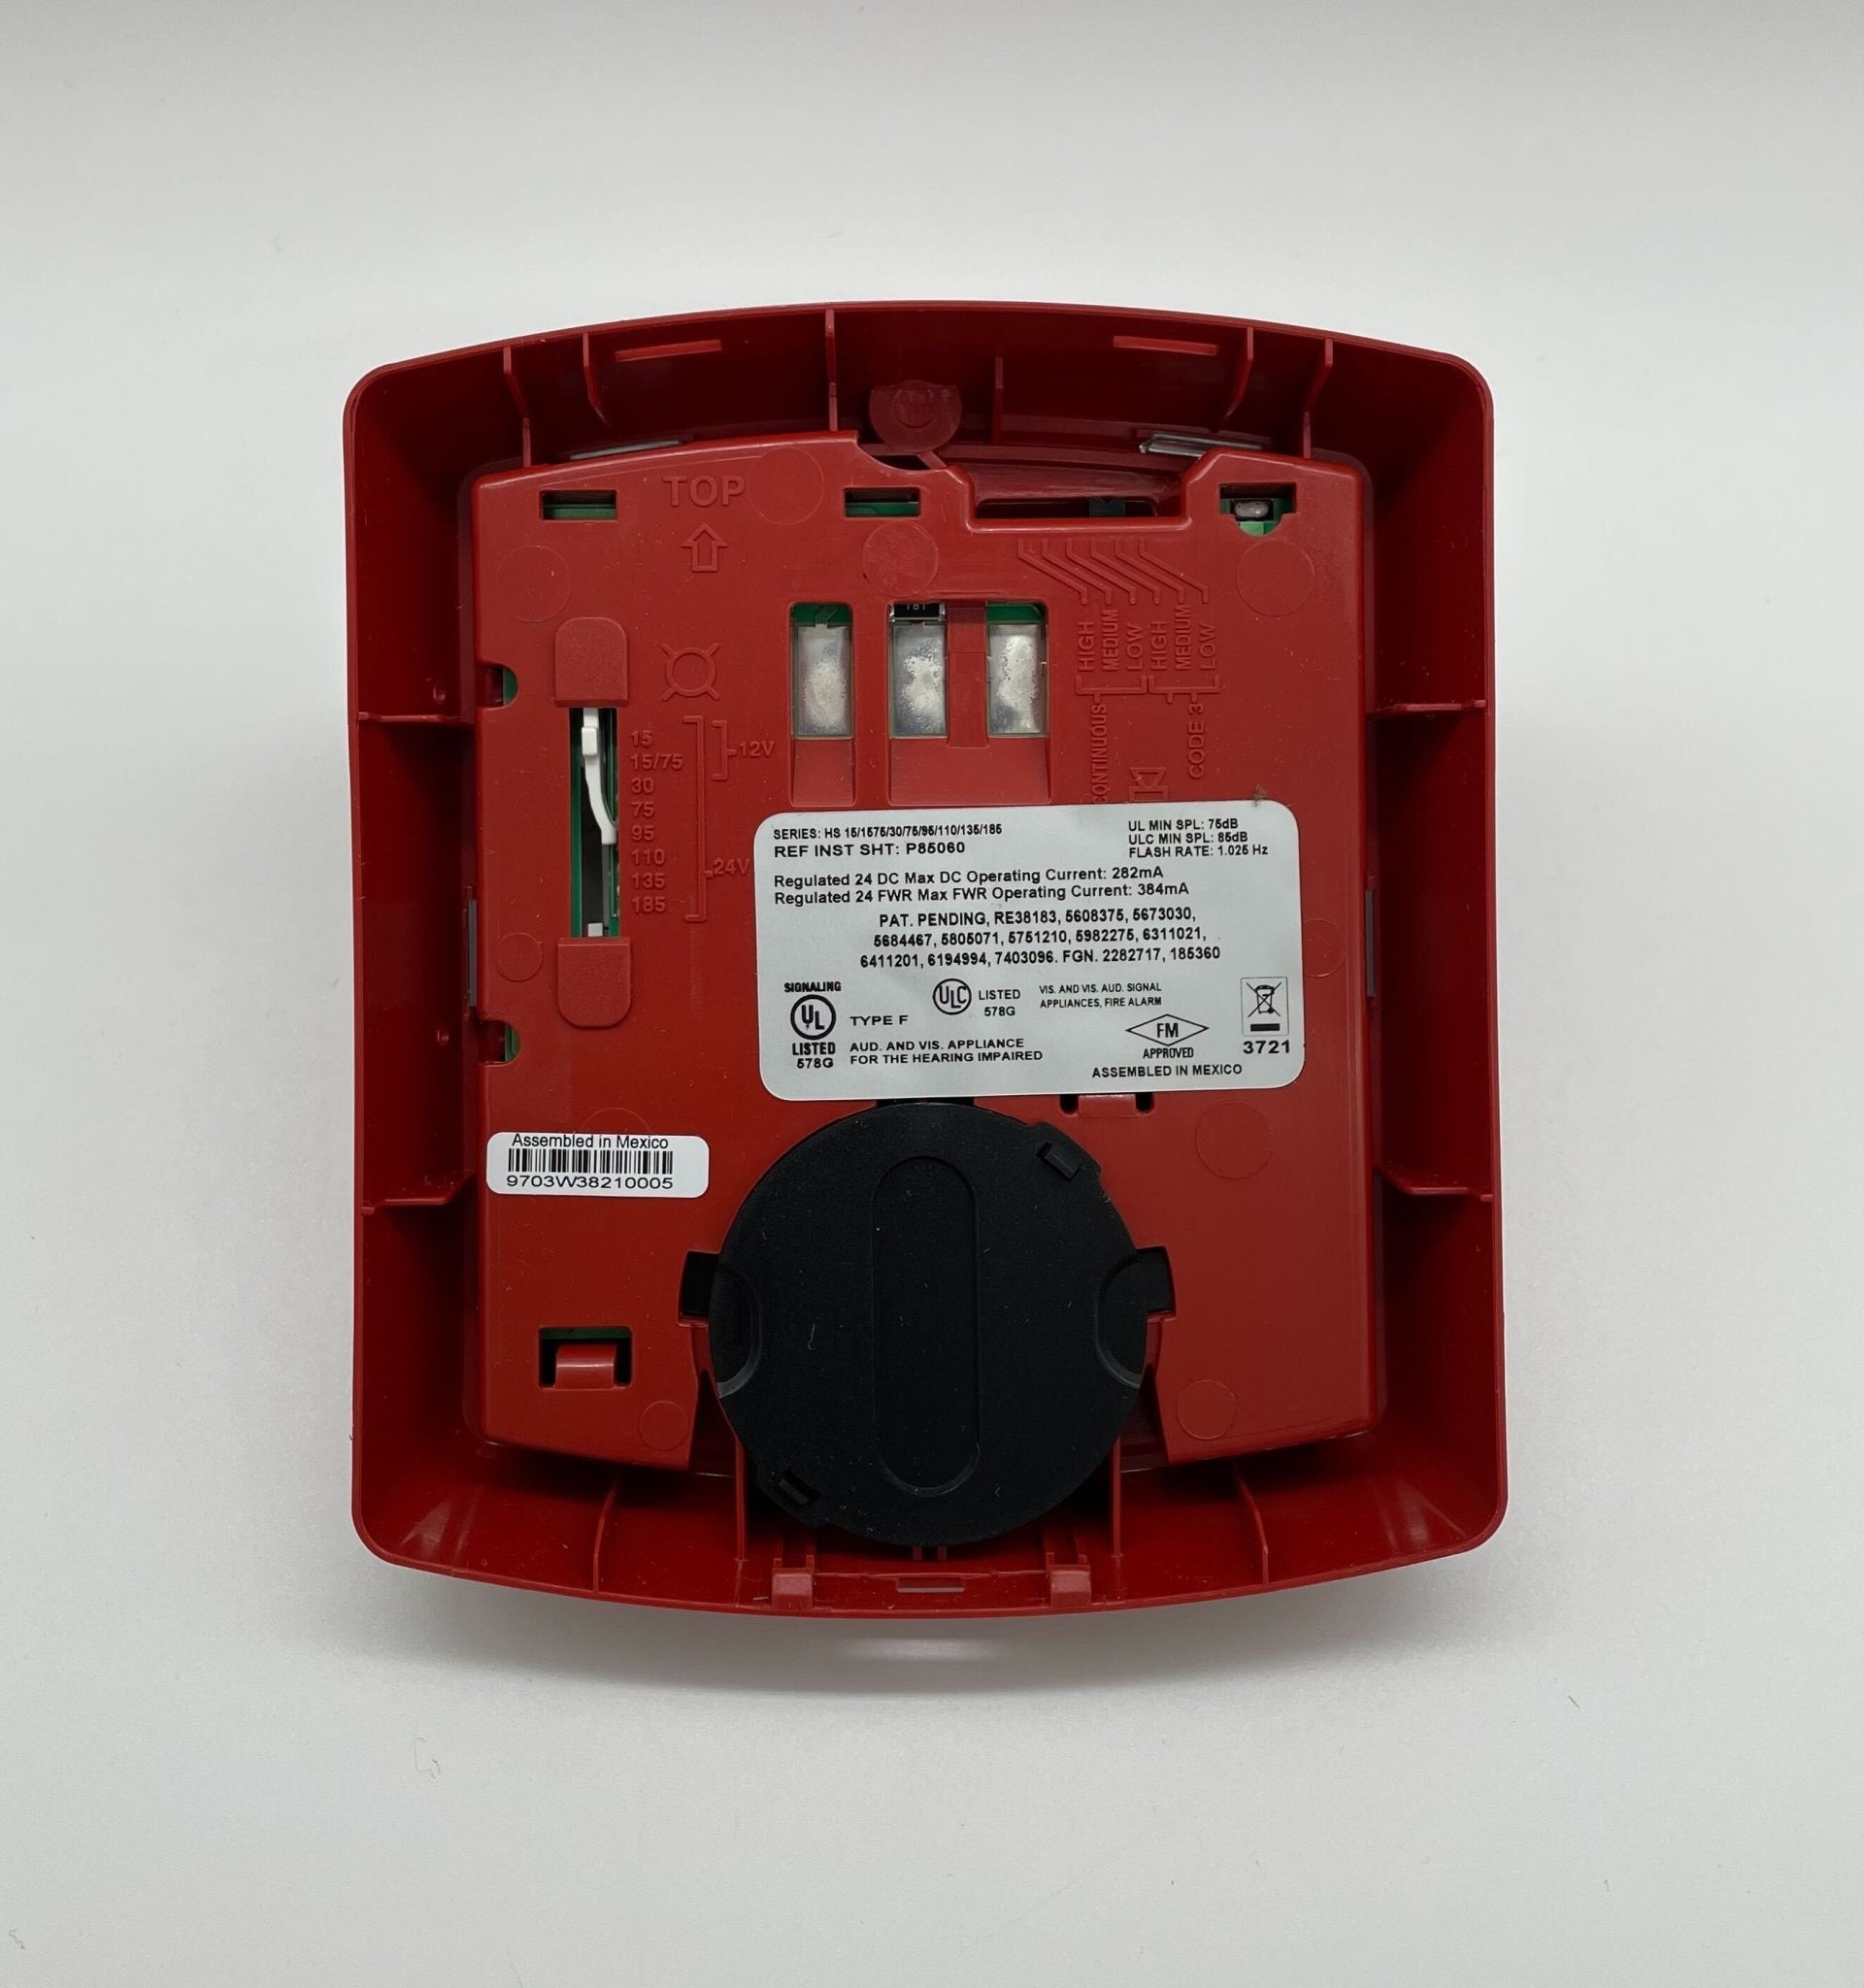 Wheelock HSR-N - The Fire Alarm Supplier